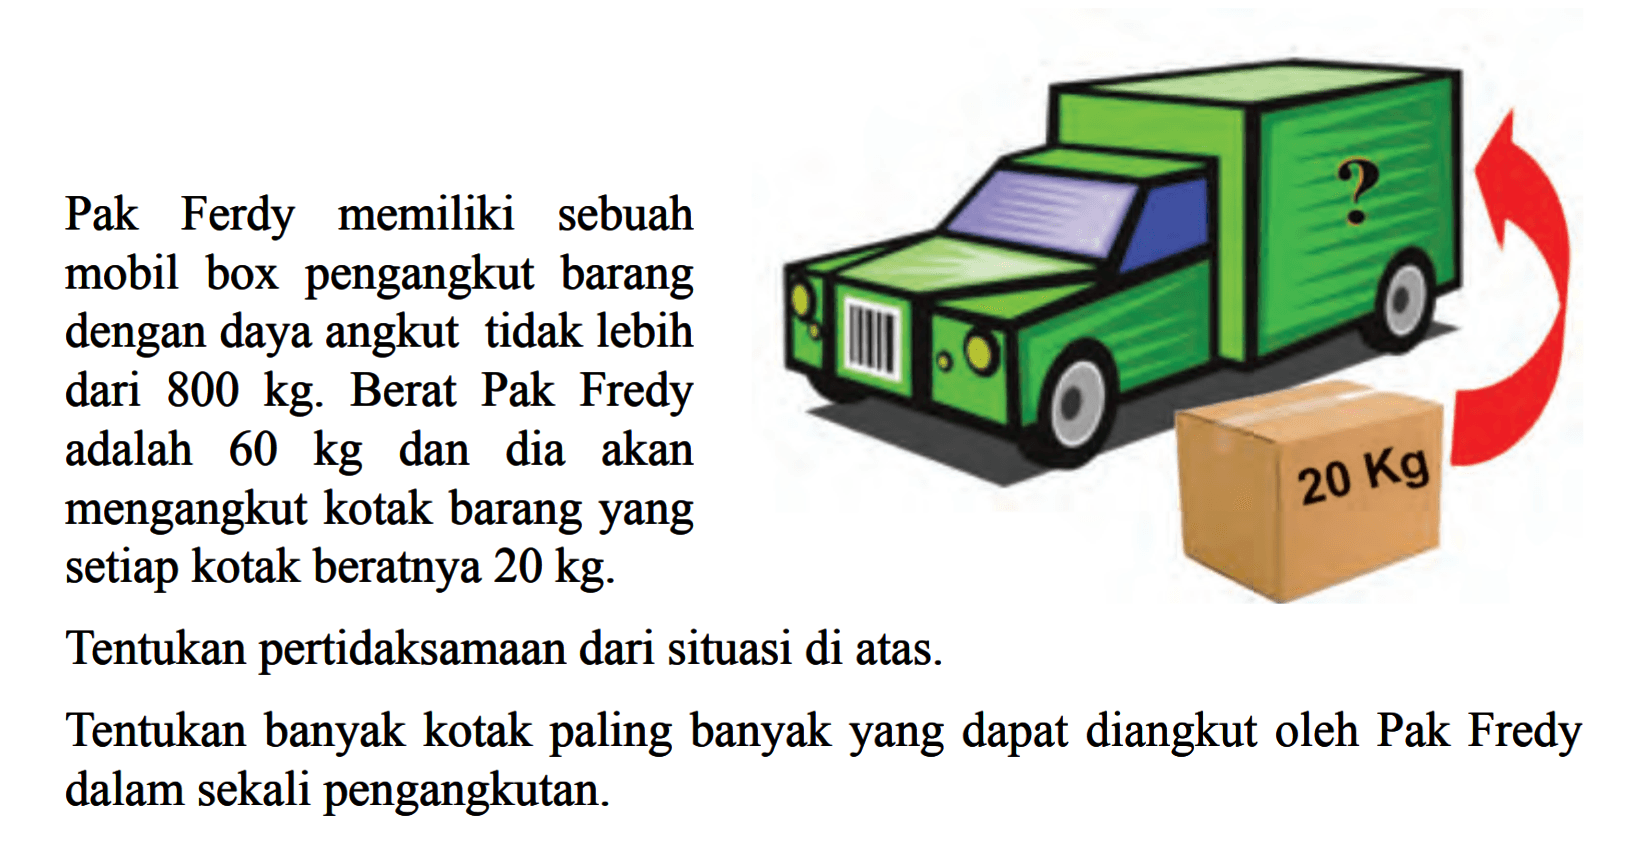 Pak Ferdy memiliki sebuah mobil box pengangkut barang dengan daya angkut tidak lebih dari 800 kg. Berat Pak Fredy adalah 60 kg dan dia akan mengangkut kotak barang yang setiap kotak beratnya 20 kg. Tentukan pertidaksamaan dari situasi di atas. Tentukan banyak kotak paling banyak yang dapat diangkut oleh Pak Fredy dalam sekali pengangkutan.